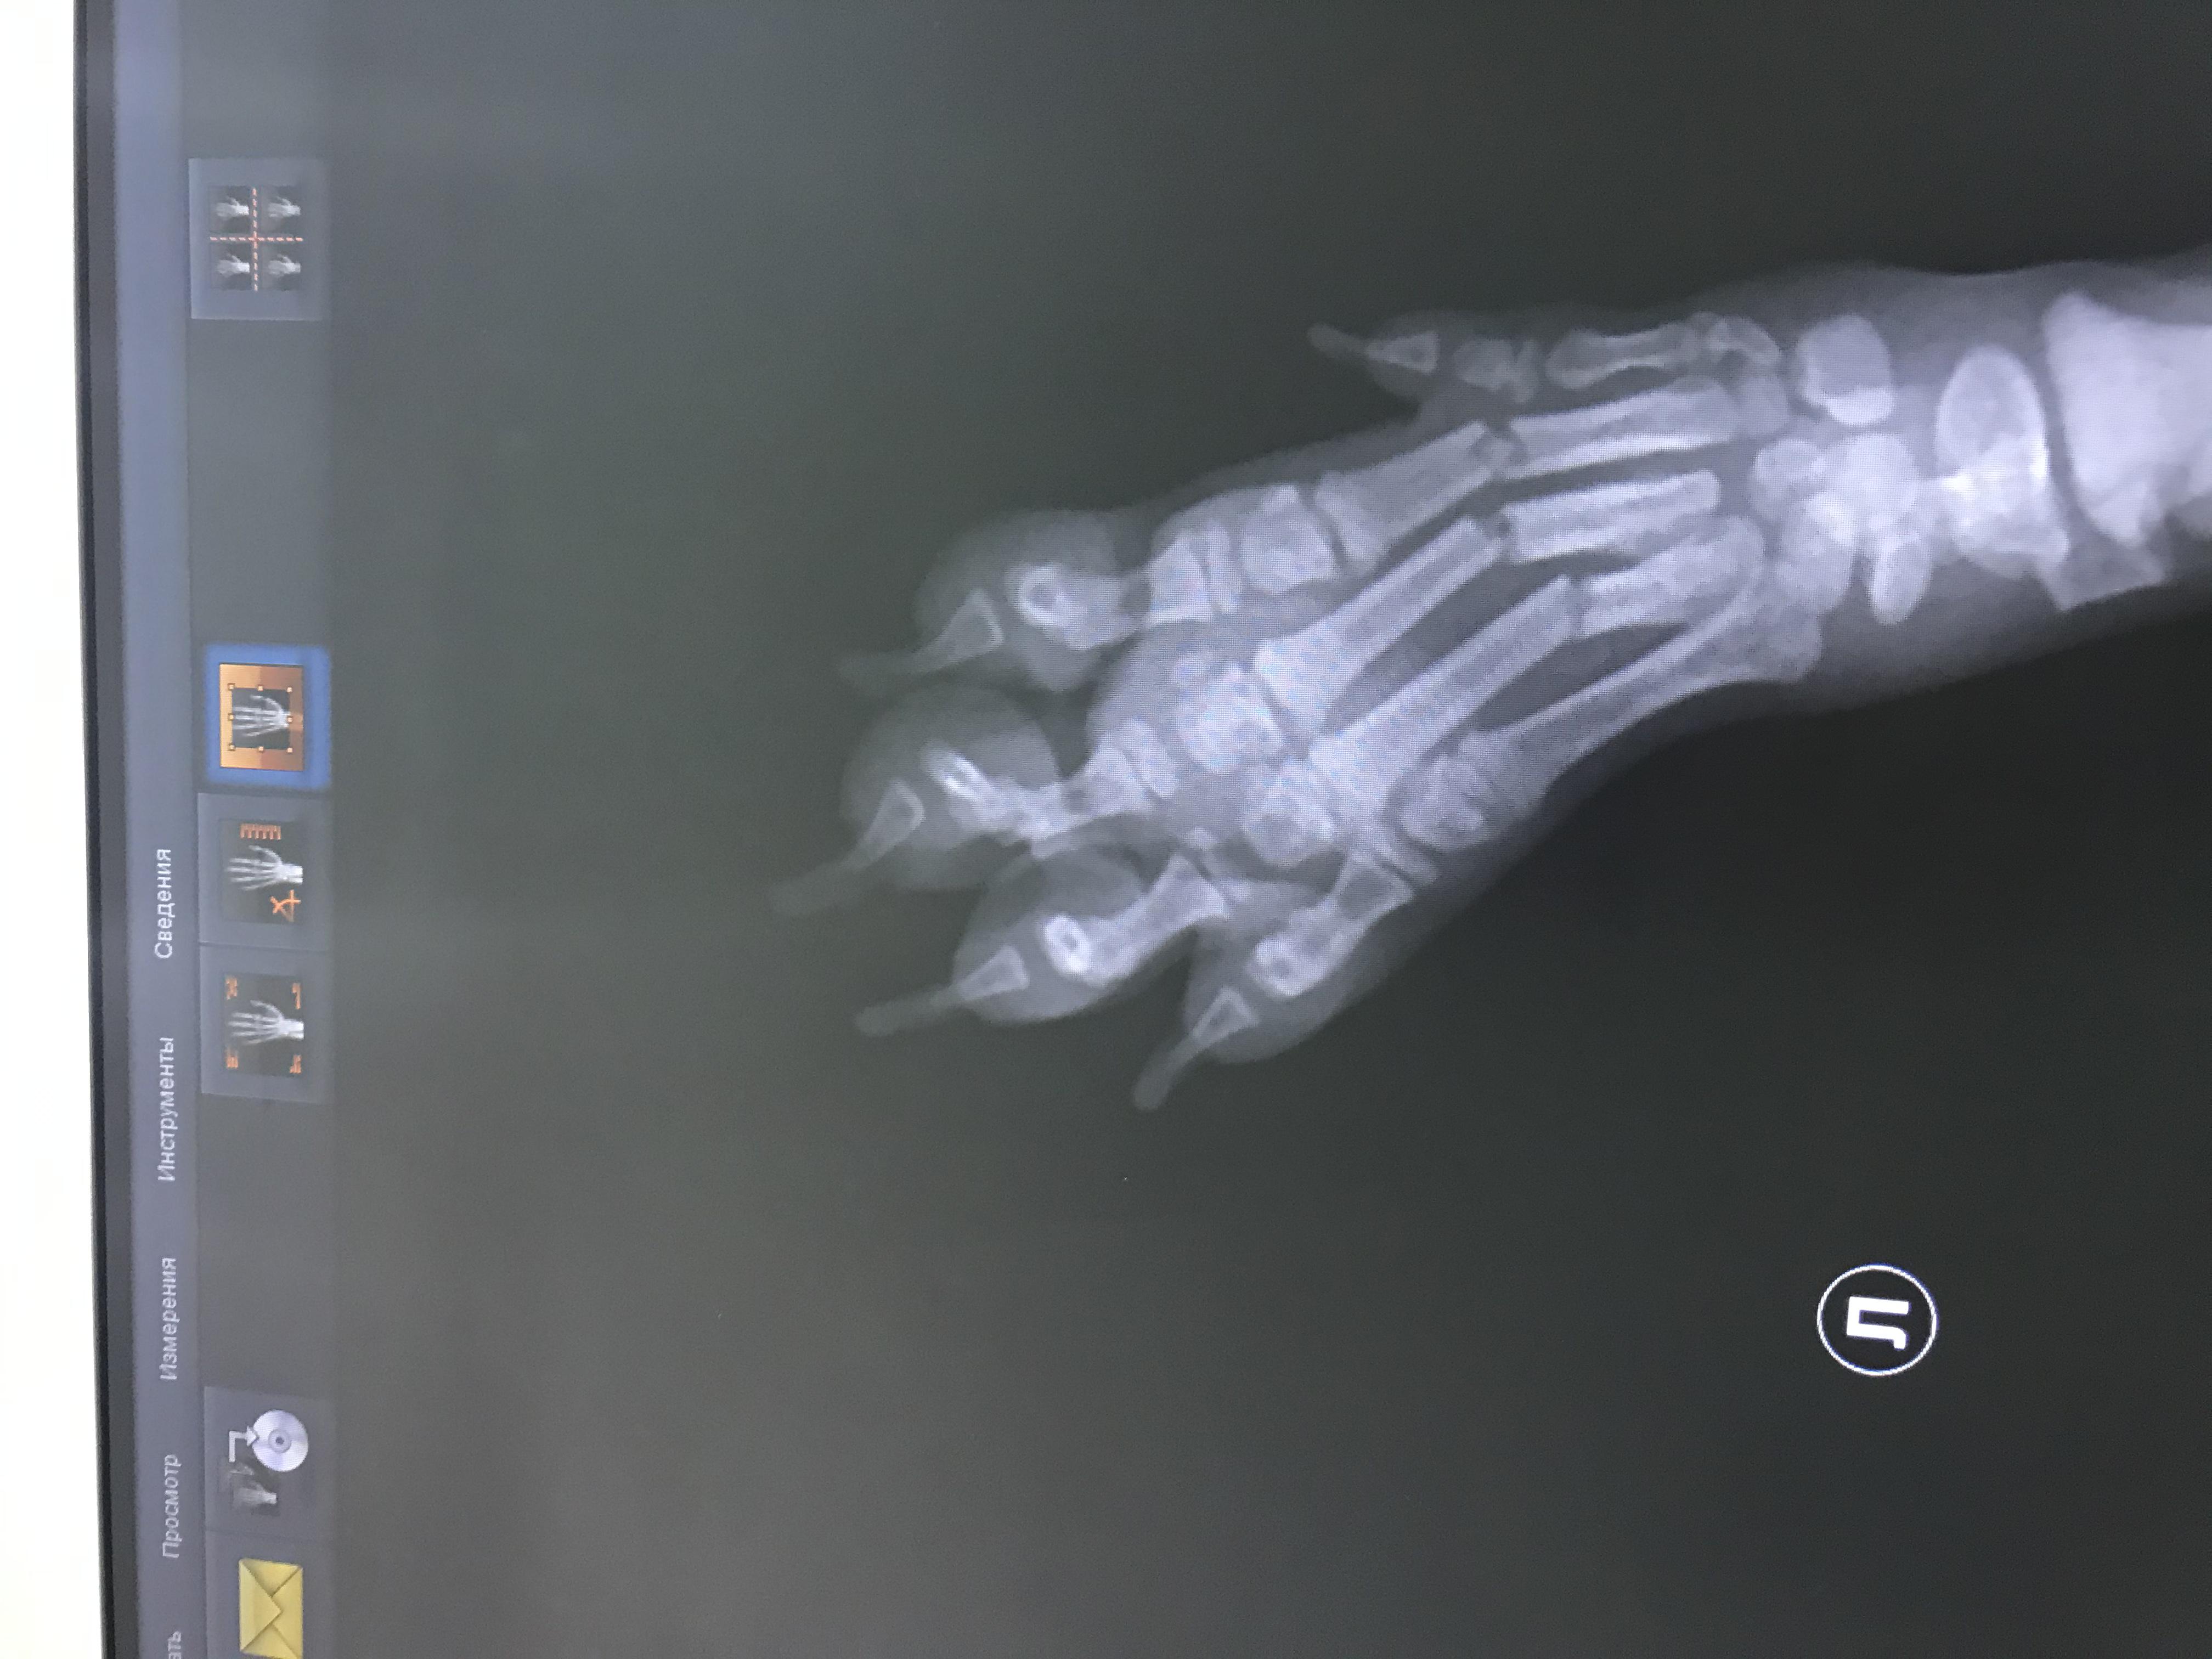 рентген руки фото